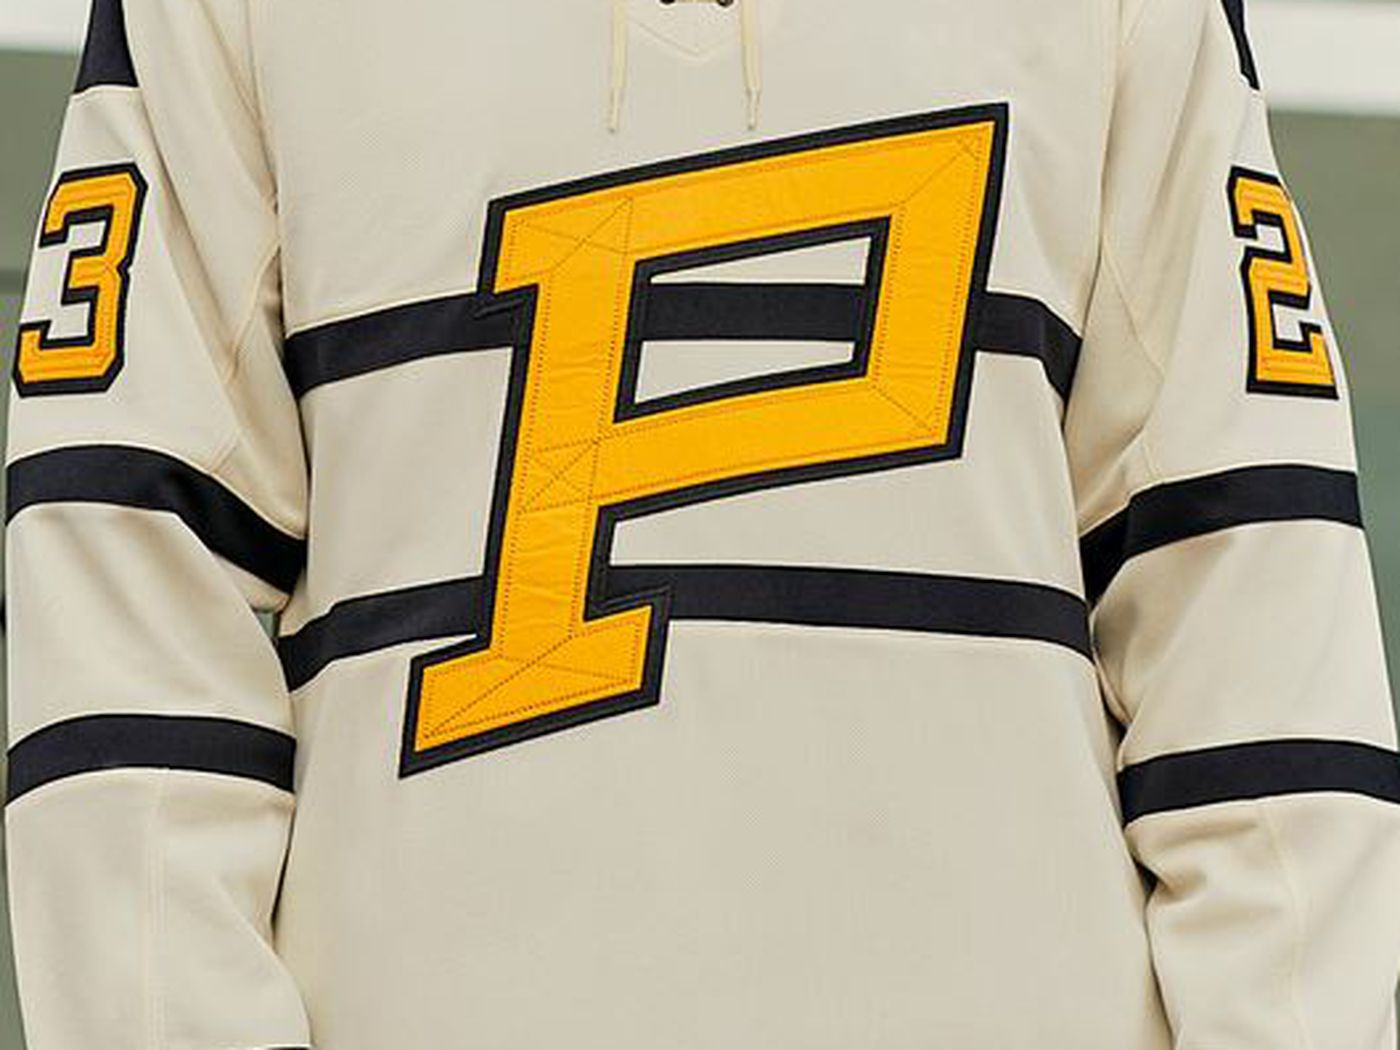 RELEASE: NHL, adidas unveil Heritage Classic uniforms